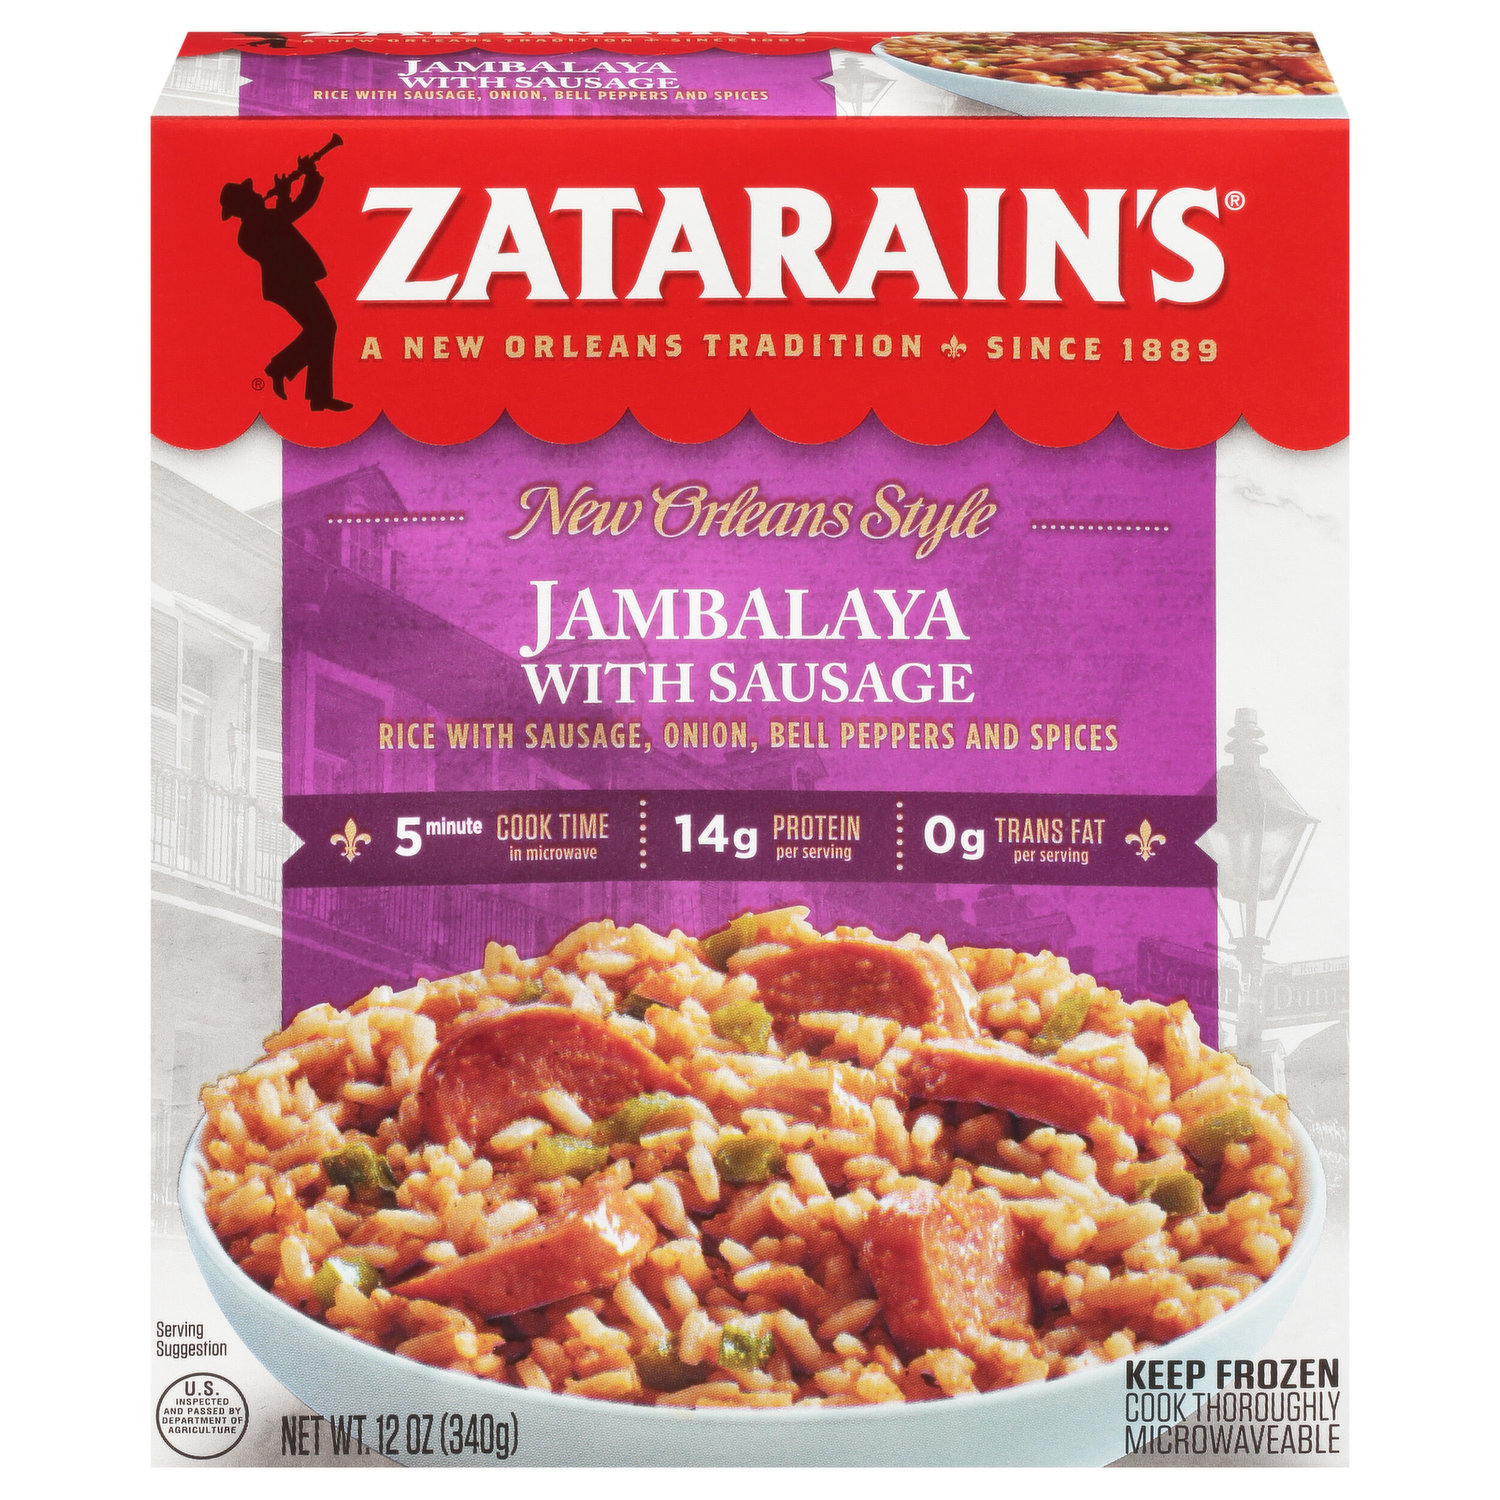 Zatarain's Frozen Meal - Shrimp Alfredo, 10.5 oz Packaged Meals